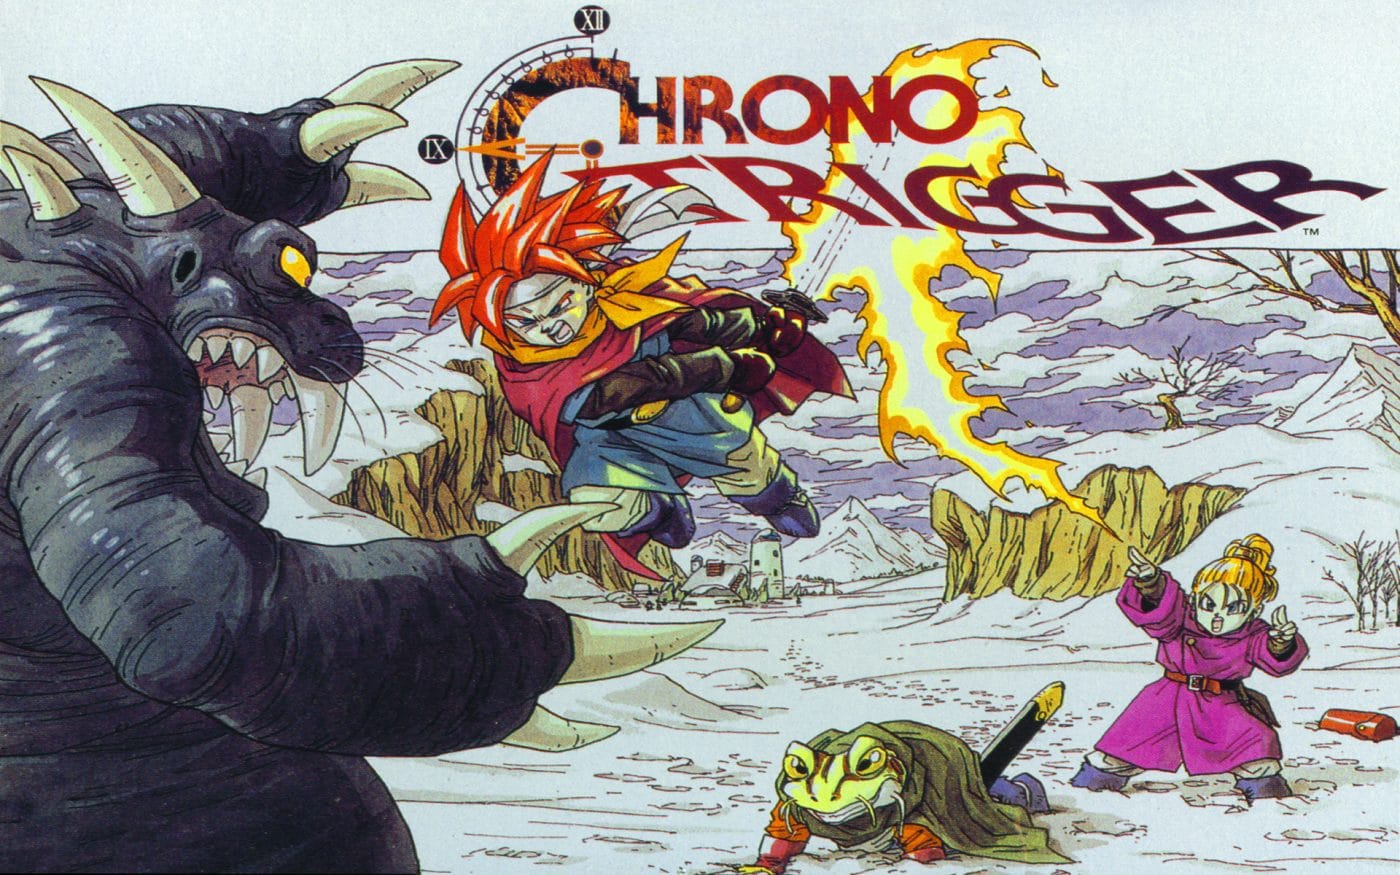 More information about "Chrono Trigger Retrospective"